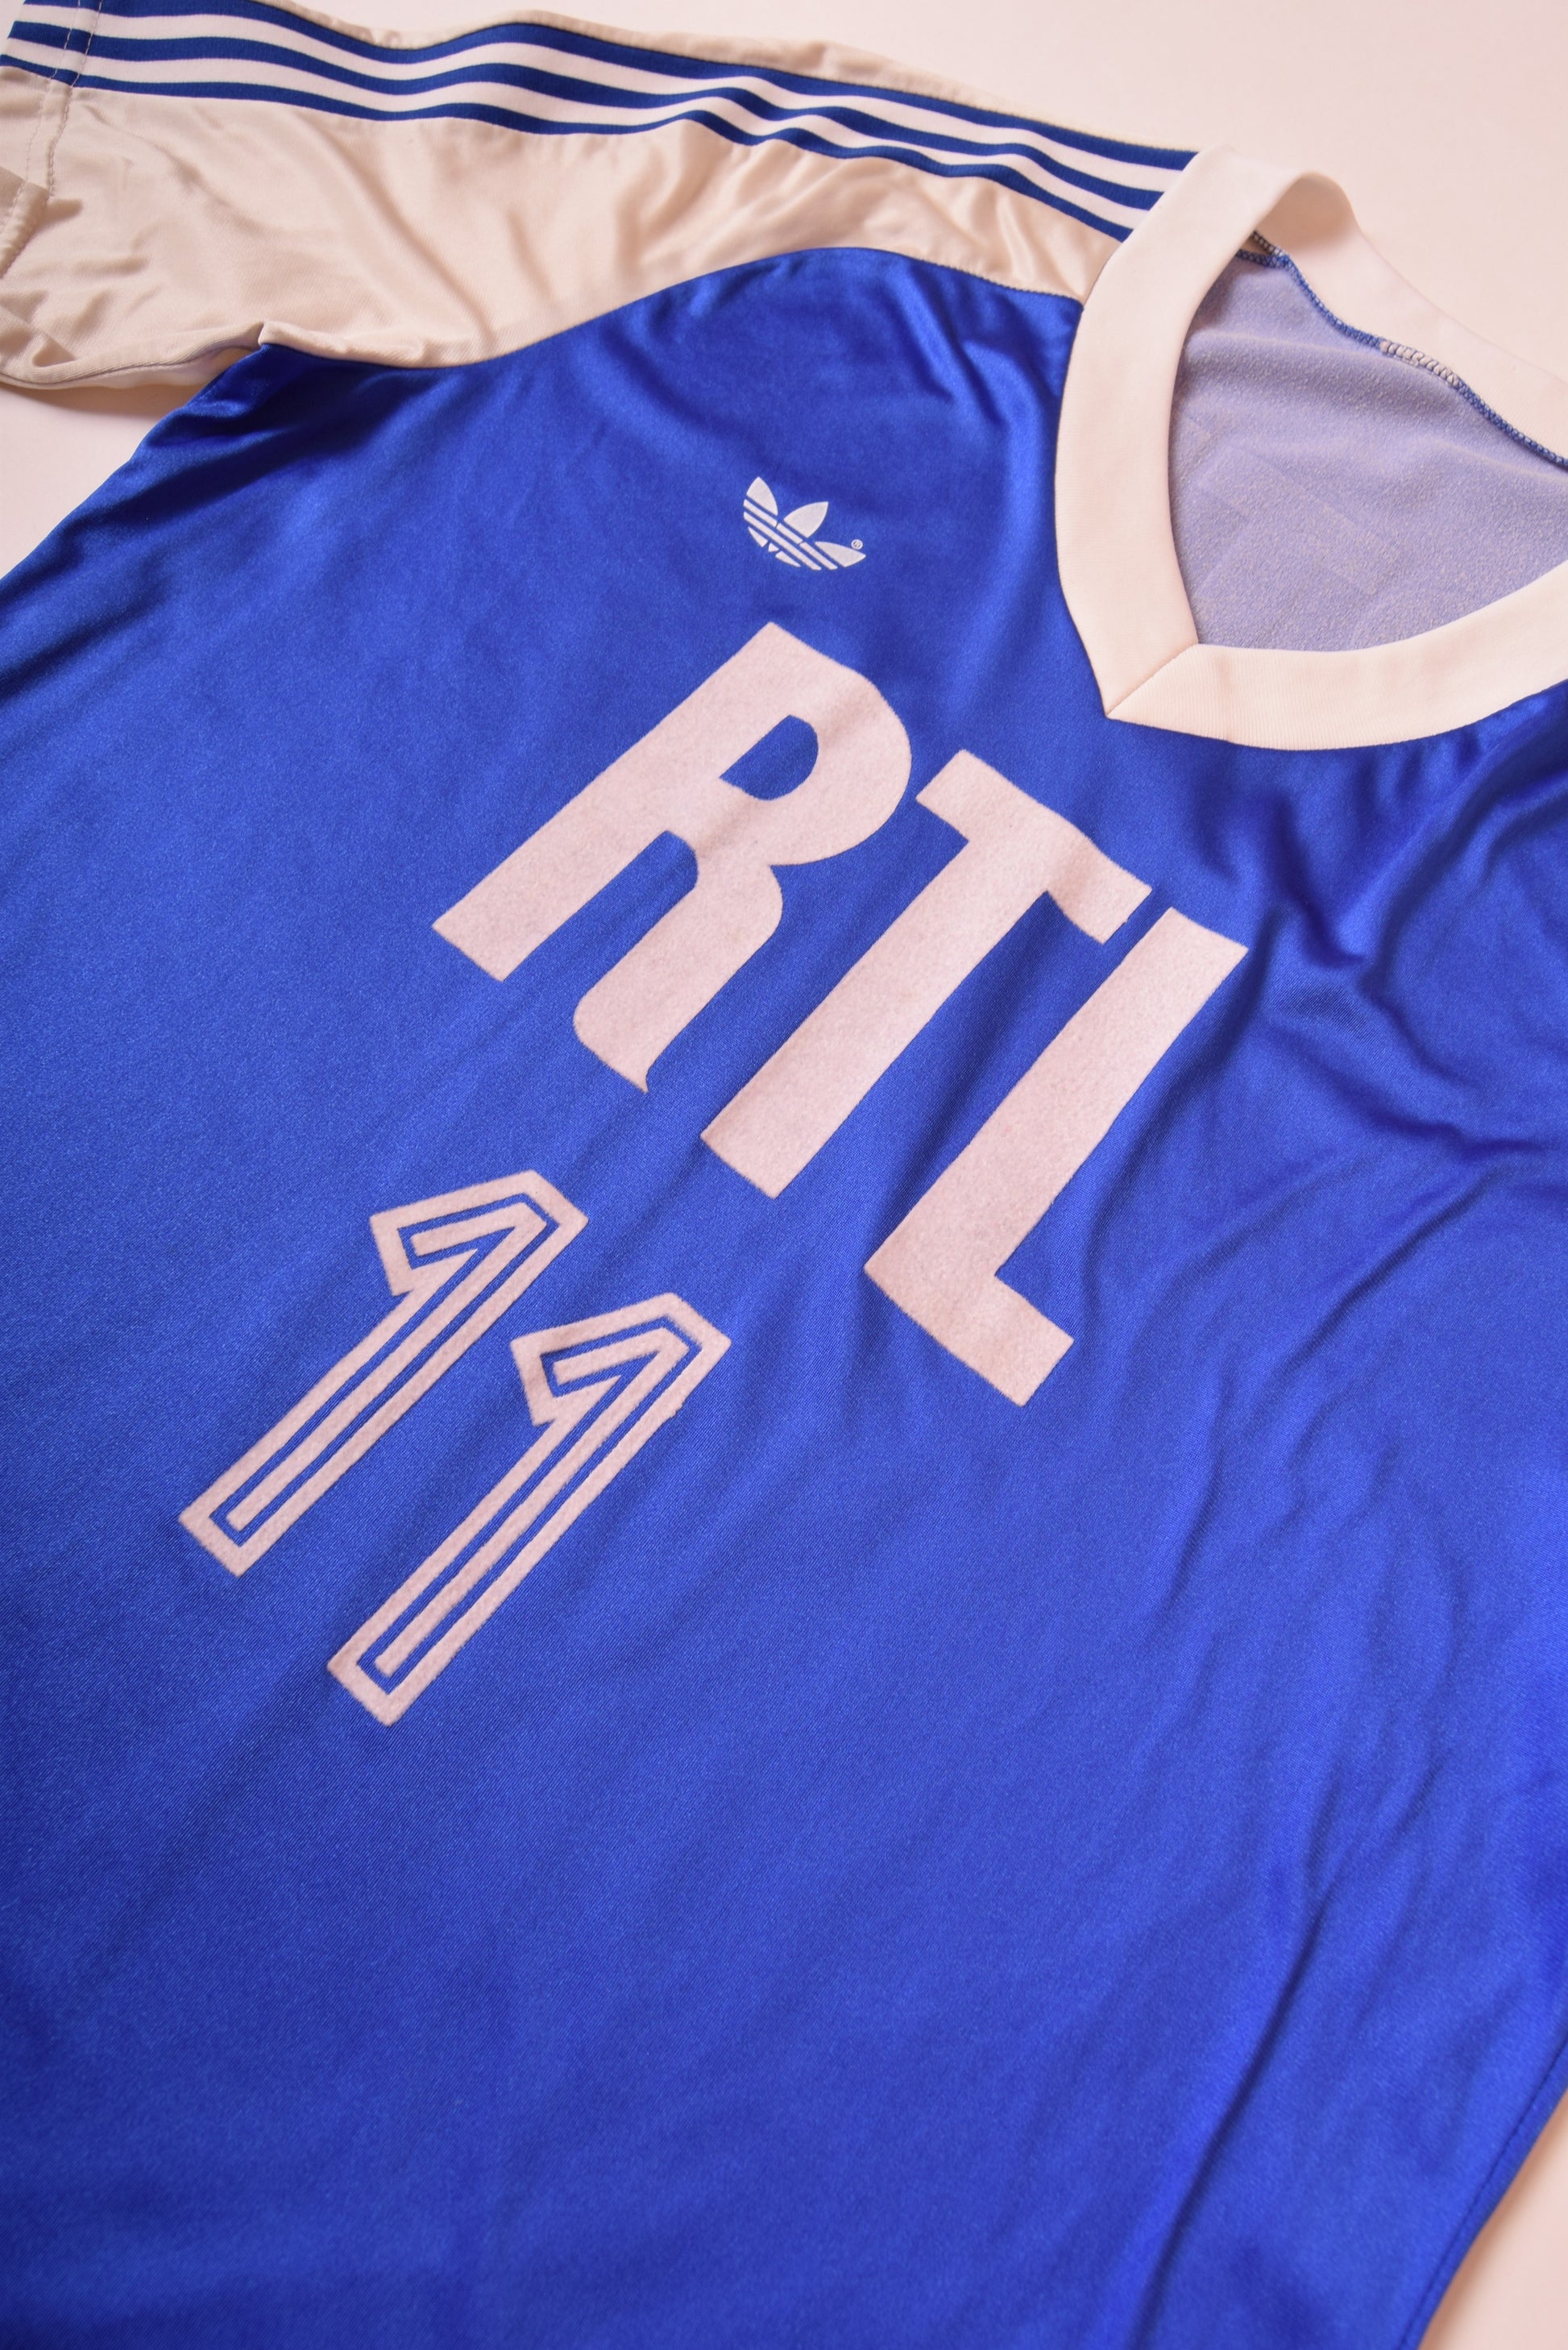 Vintage Adidas Football Shirt RTL #11 Size M